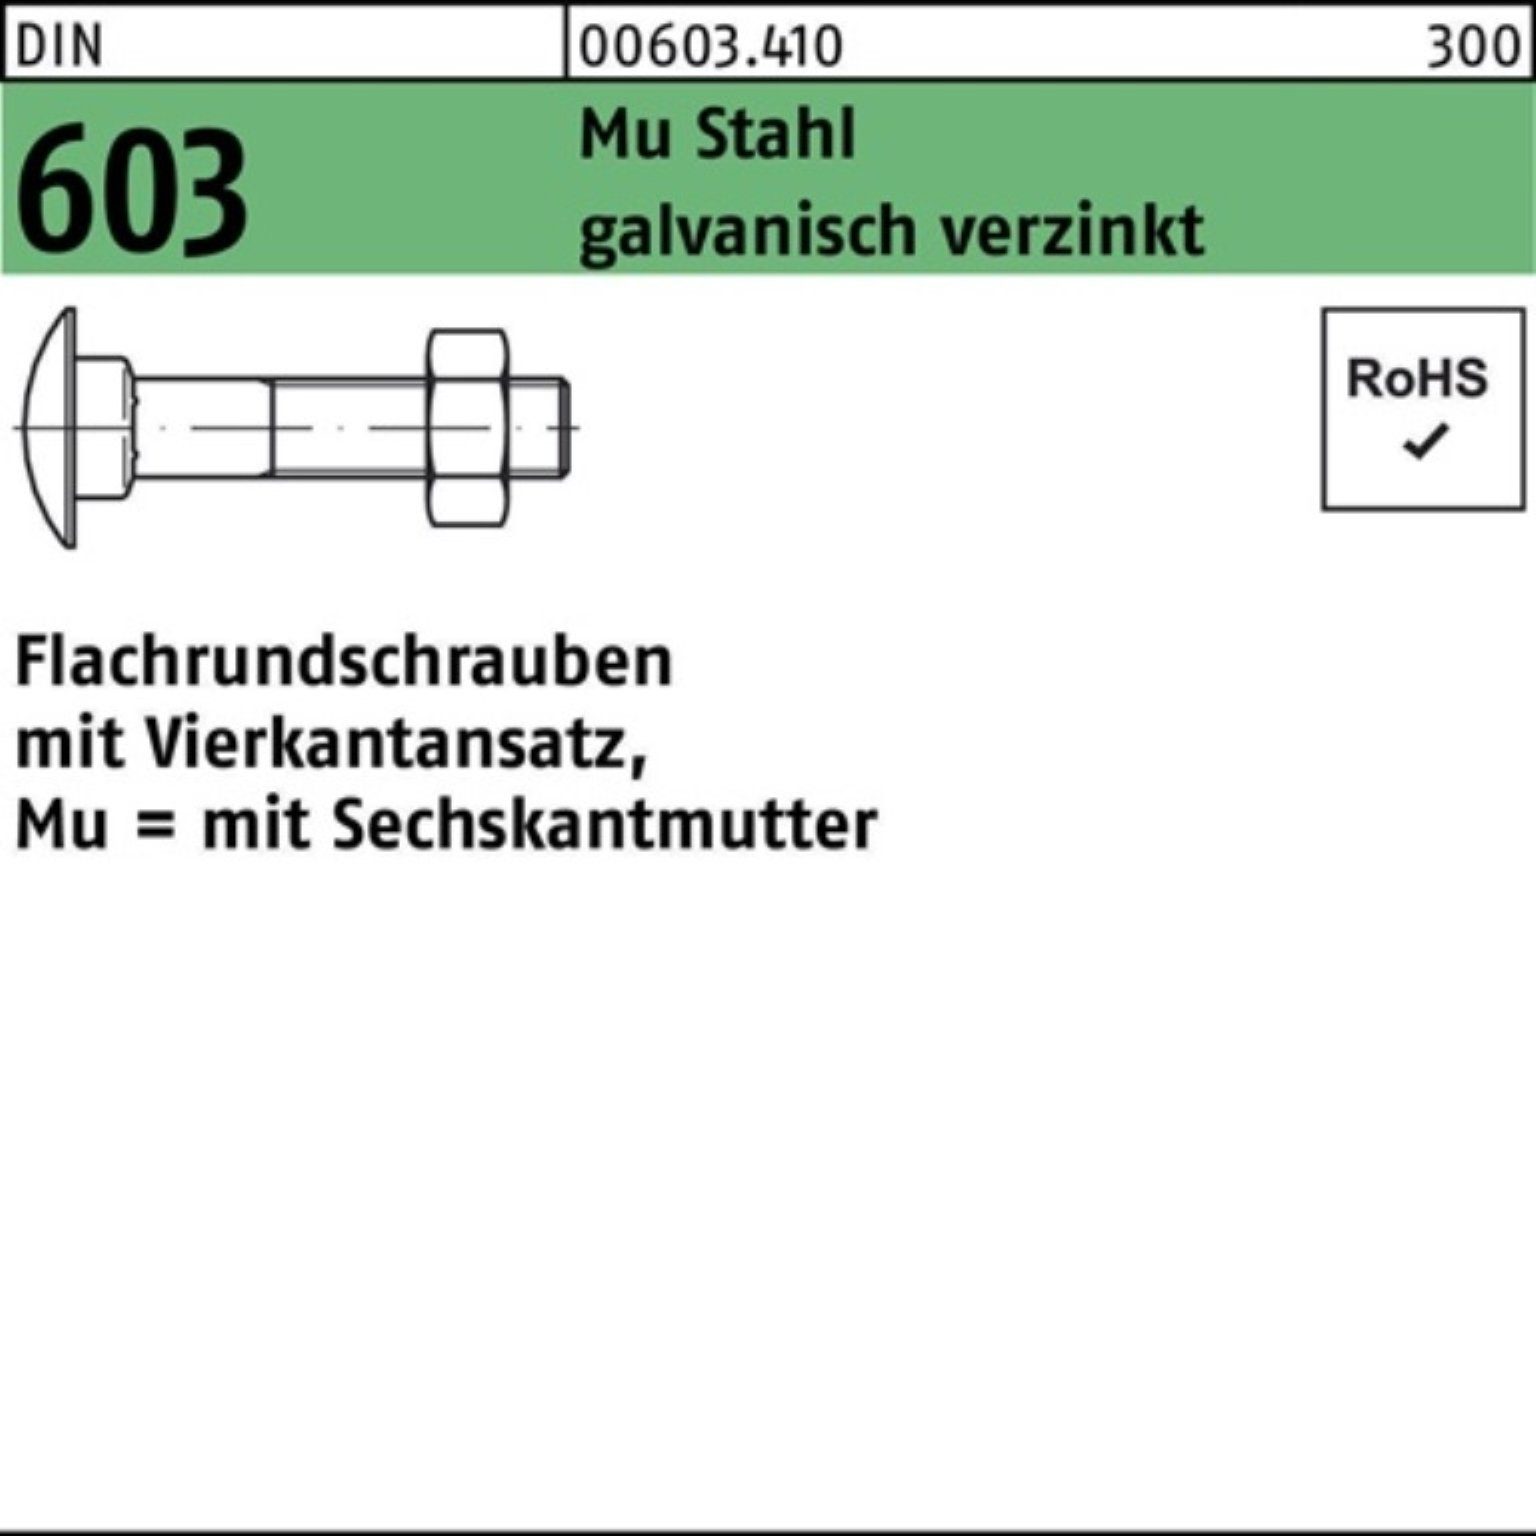 Vierkantansatz/6-ktmutter Pack Schraube 200er DIN Reyher 603 M8x80 Flachrundschraube M